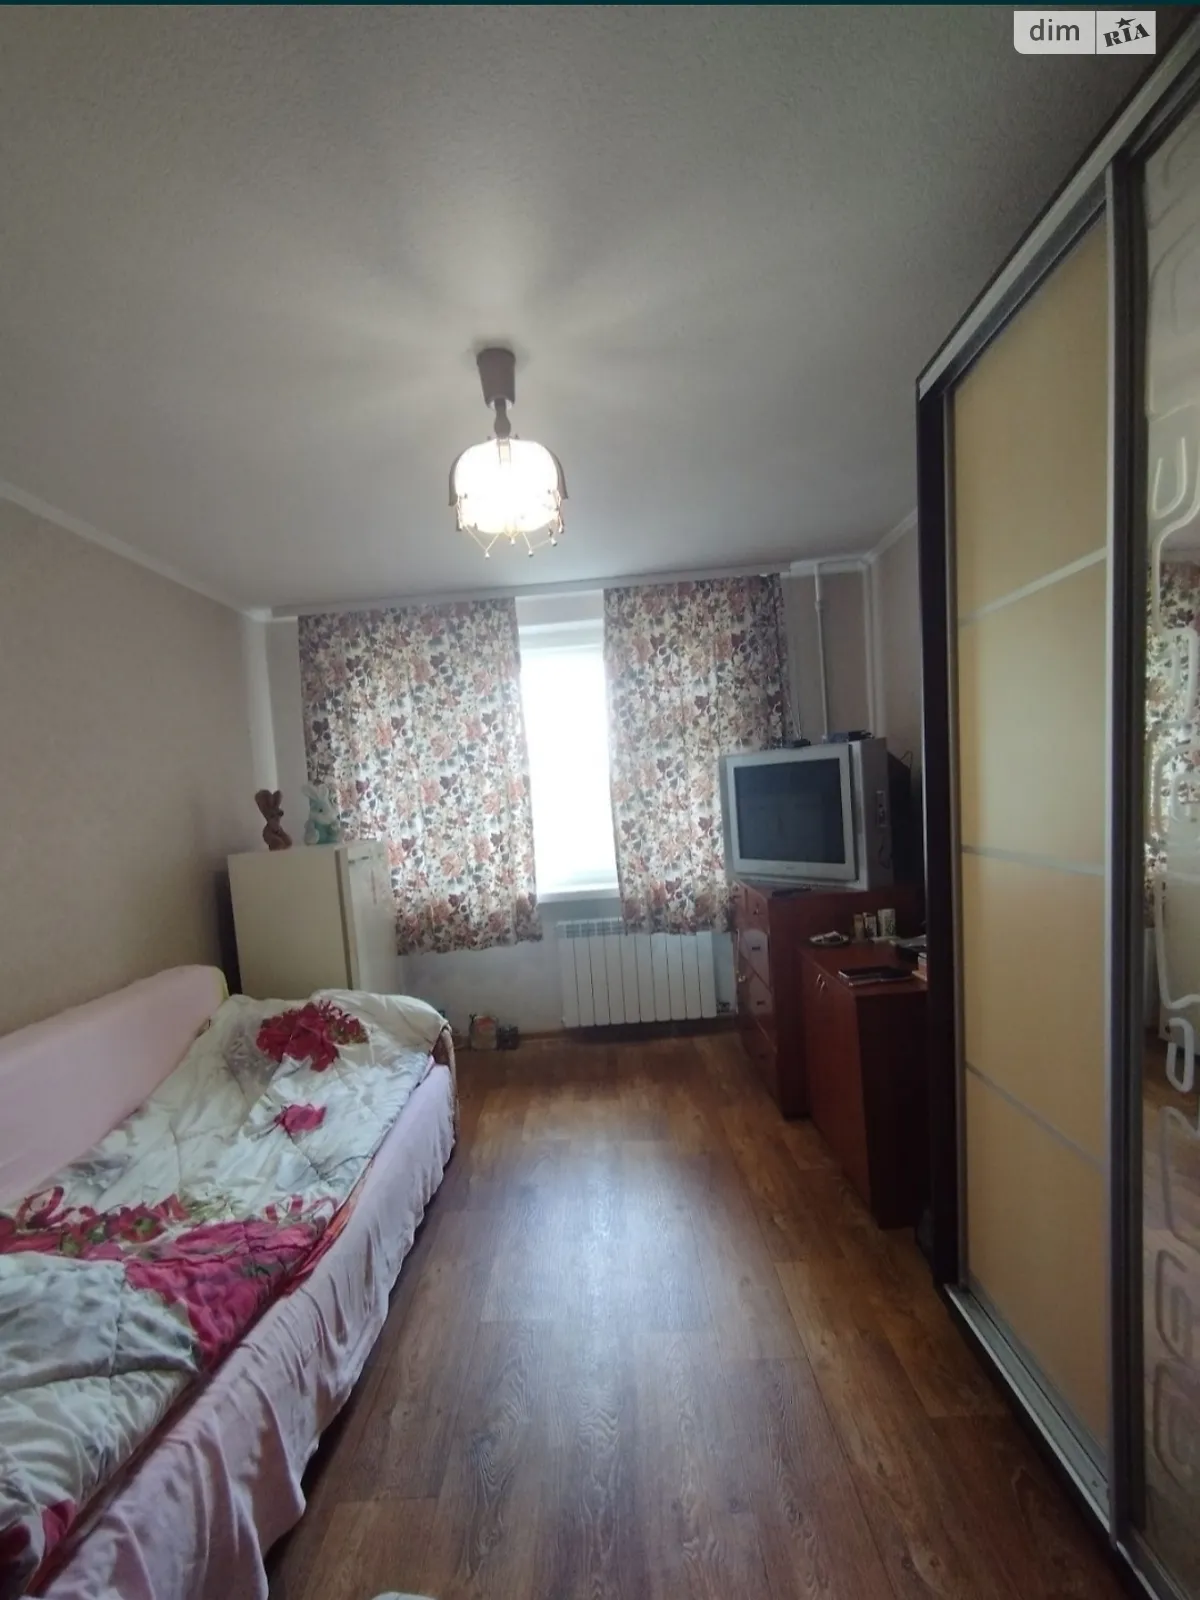 Продается комната 30 кв. м в Харькове - фото 2